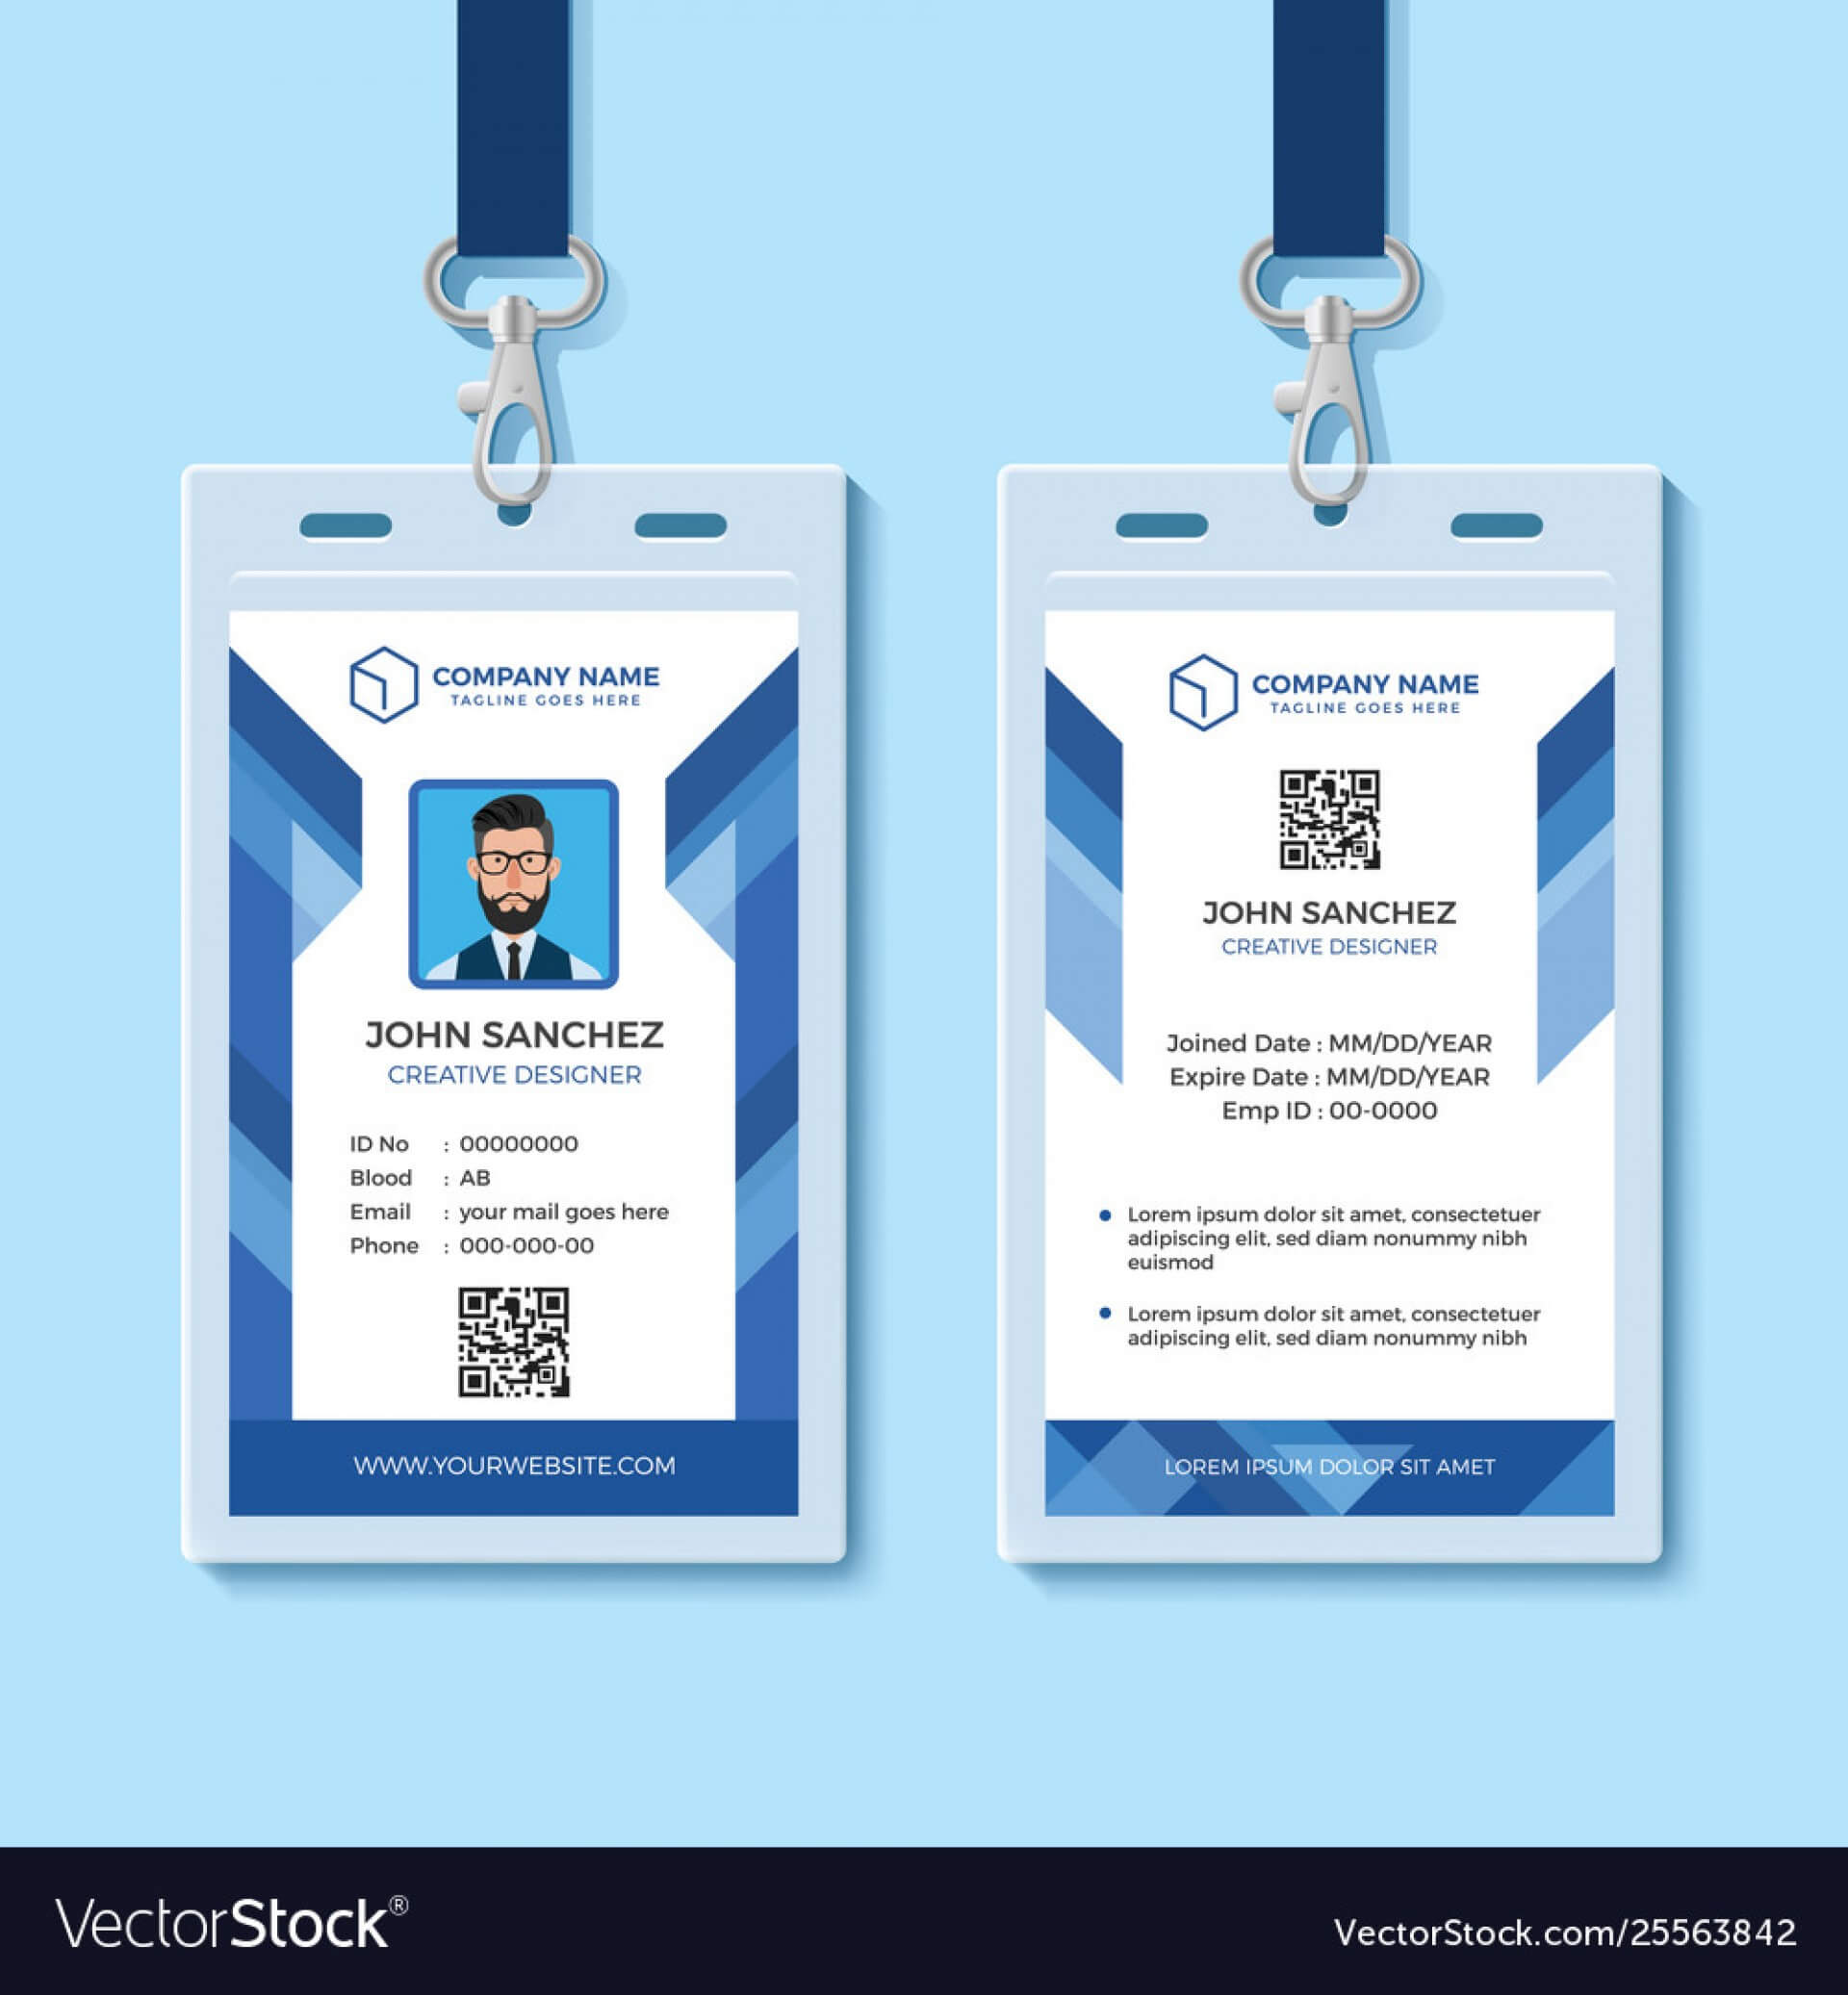 042 Template Ideas Employee Id Card Templates Blue Design Inside Employee Card Template Word